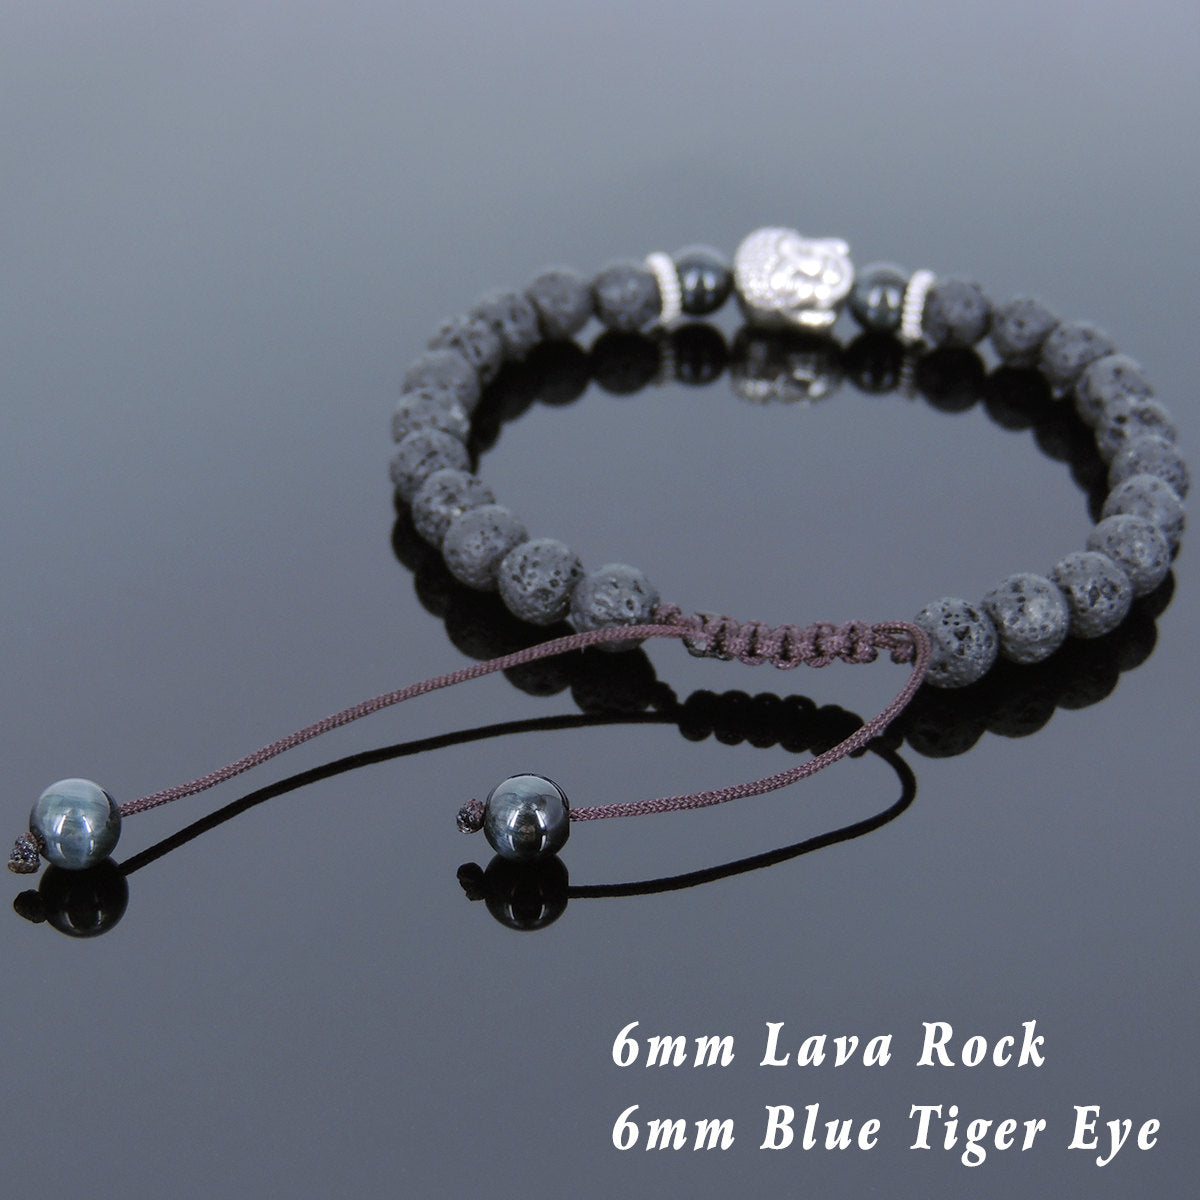 6mm Blue Tiger Eye & Lava Rock Adjustable Braided Stone Bracelet with Tibetan Silver Spacers & Guanyin Buddha Bead - Handmade by Gem & Silver TSB216